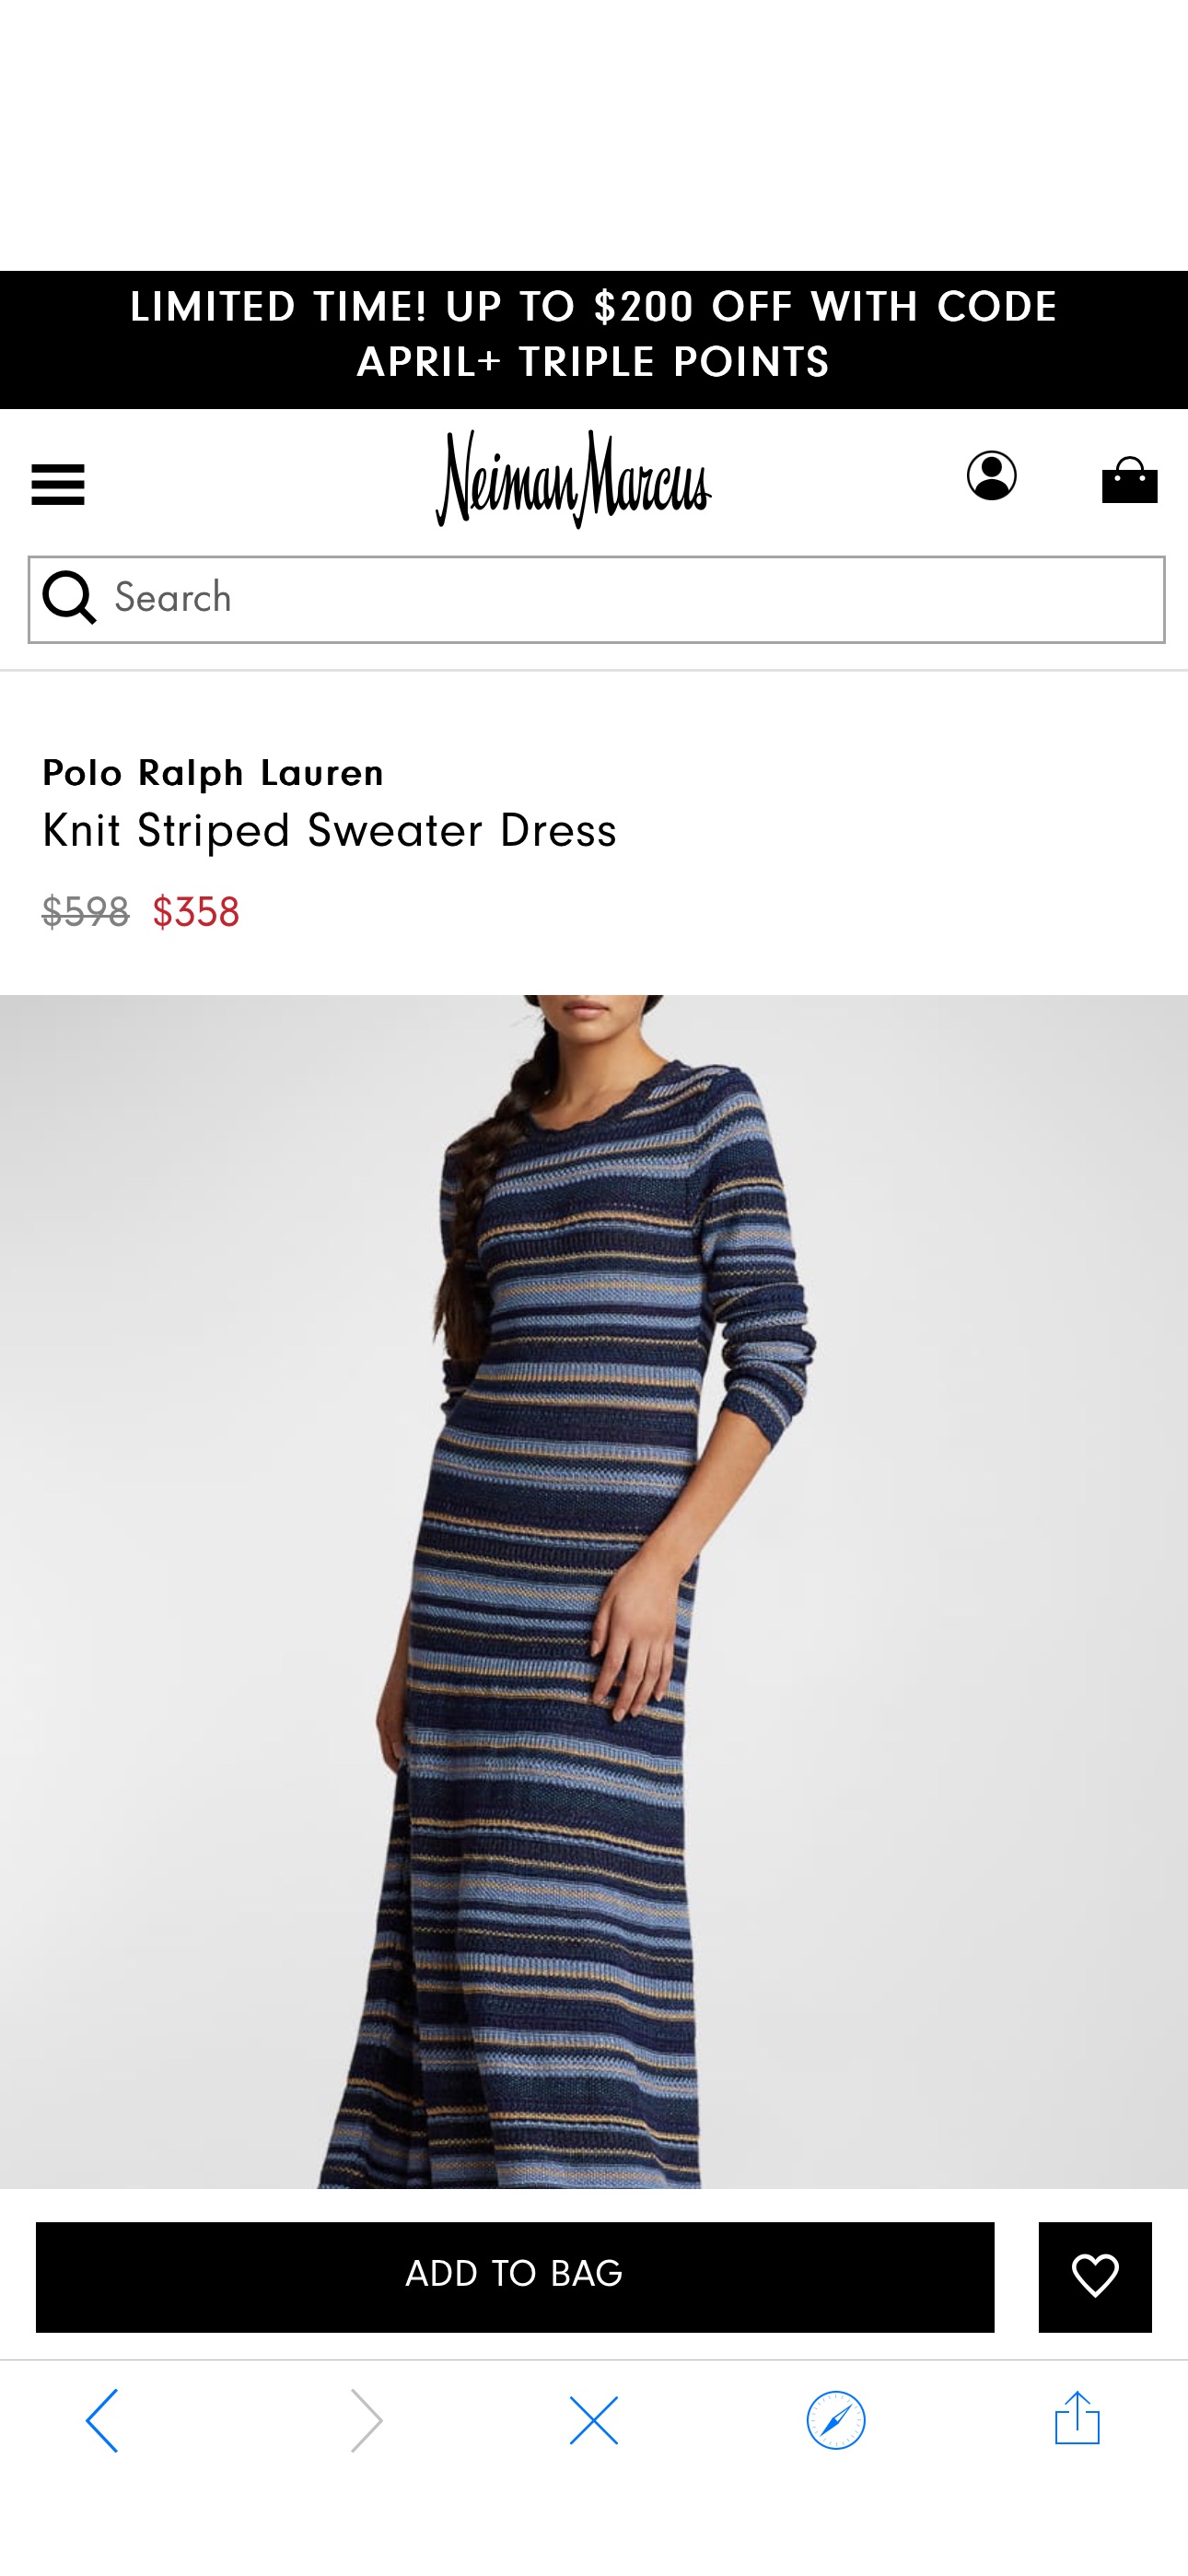 Polo Ralph Lauren Knit Striped Sweater Dress | Neiman Marcus